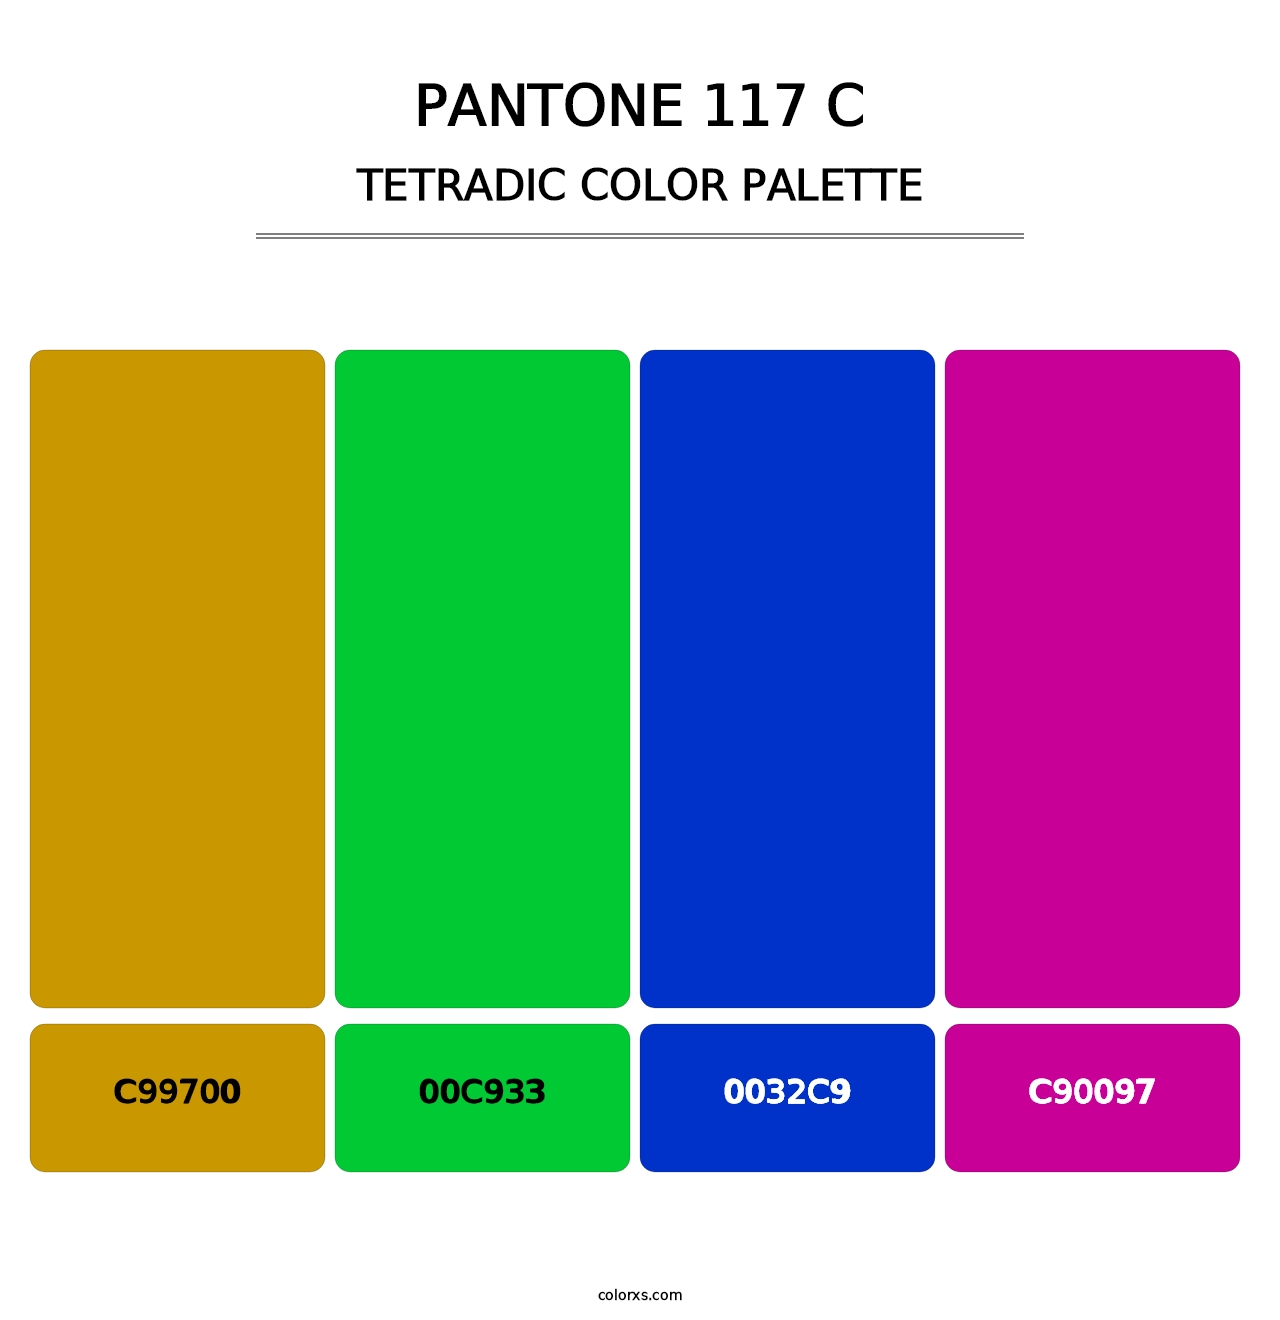 PANTONE 117 C - Tetradic Color Palette